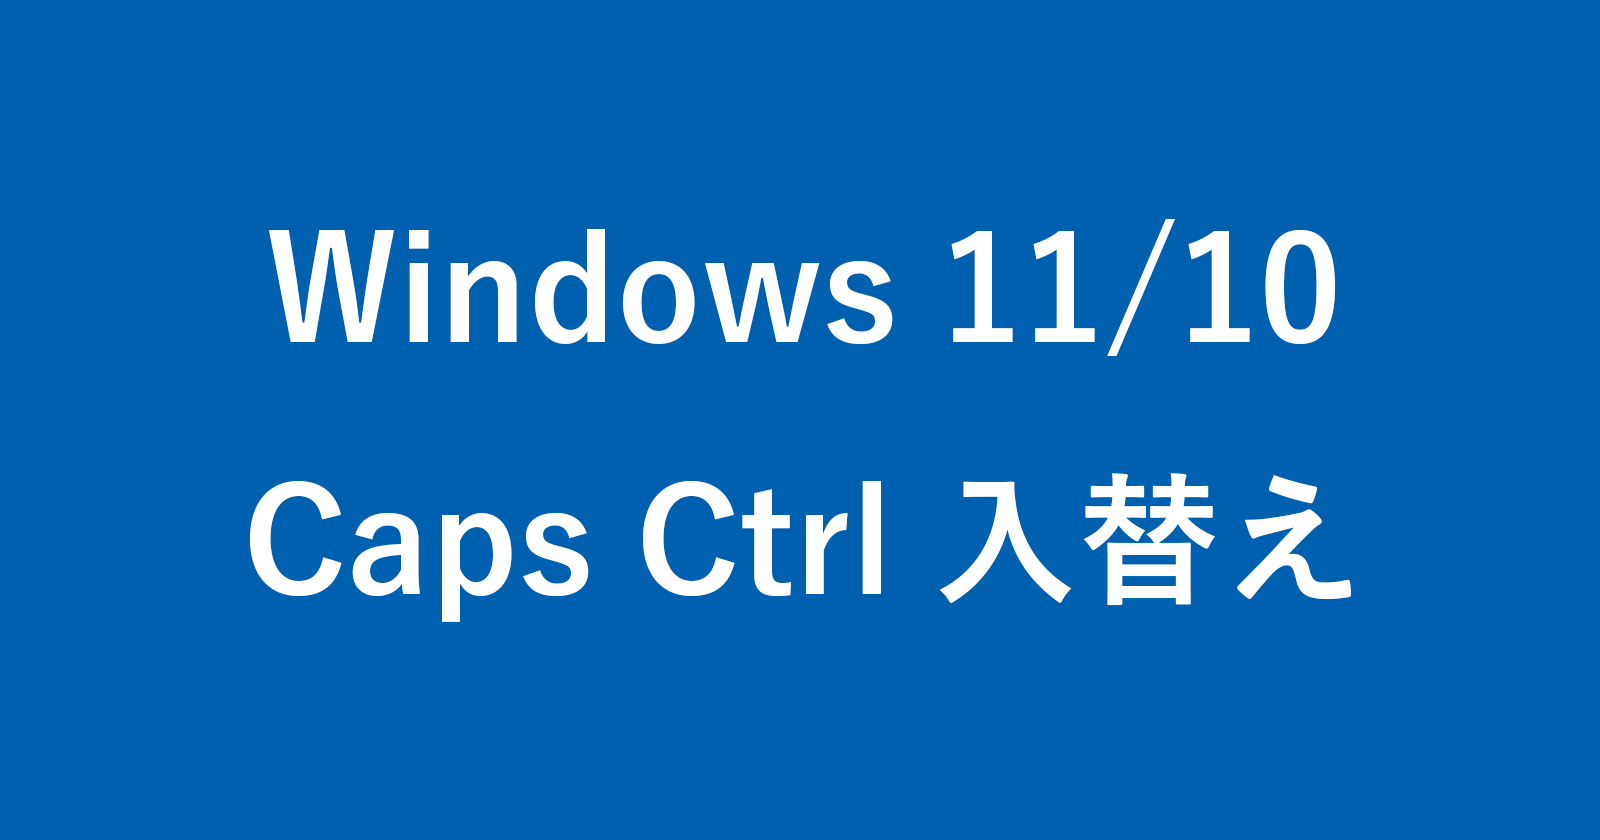 windows map caps ctrl